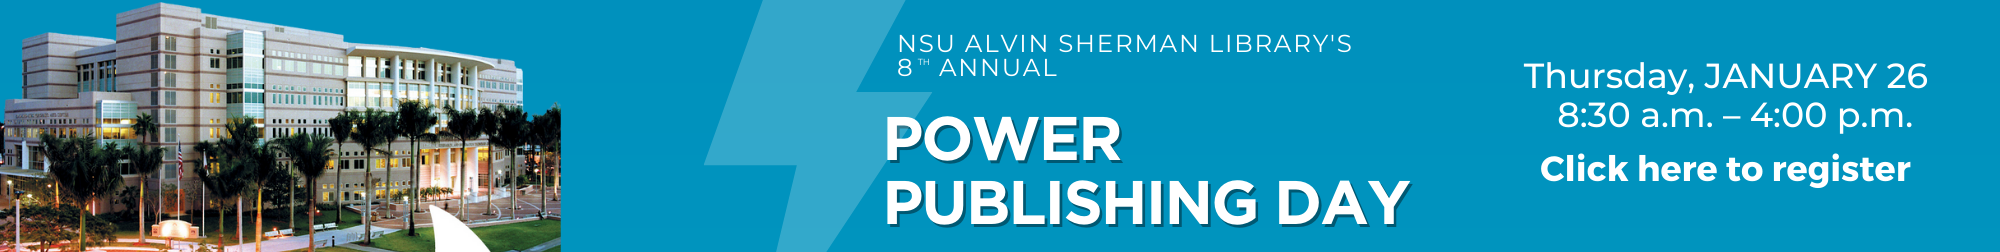 Power Publishing Day